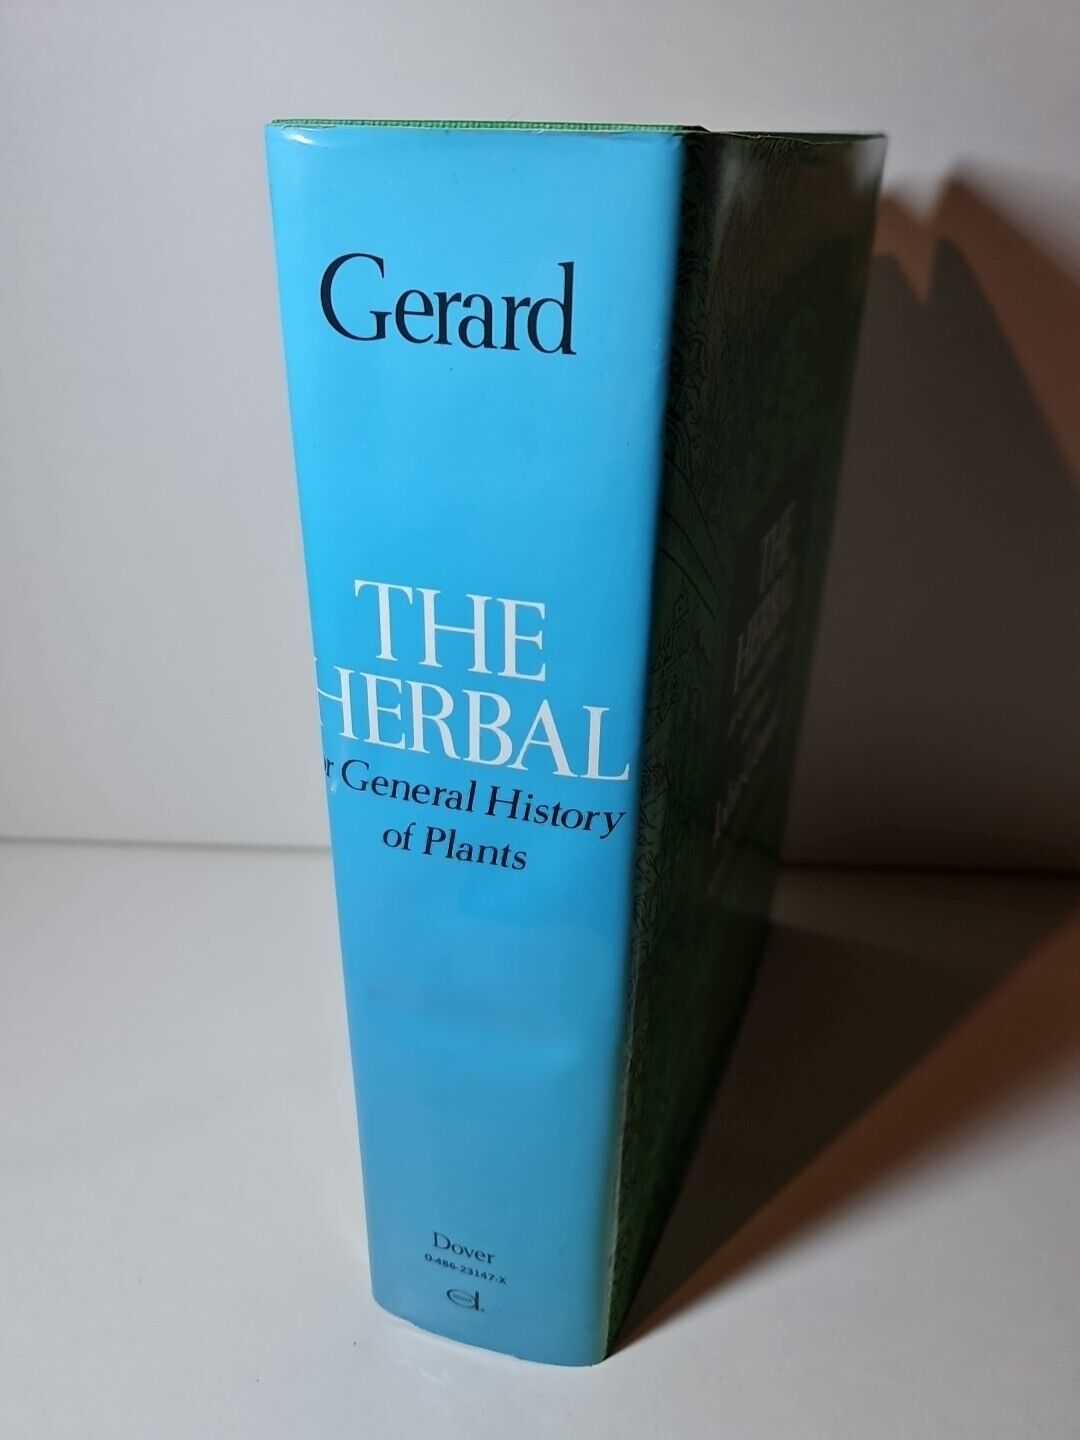 The Herbal by John Gerard (2003)